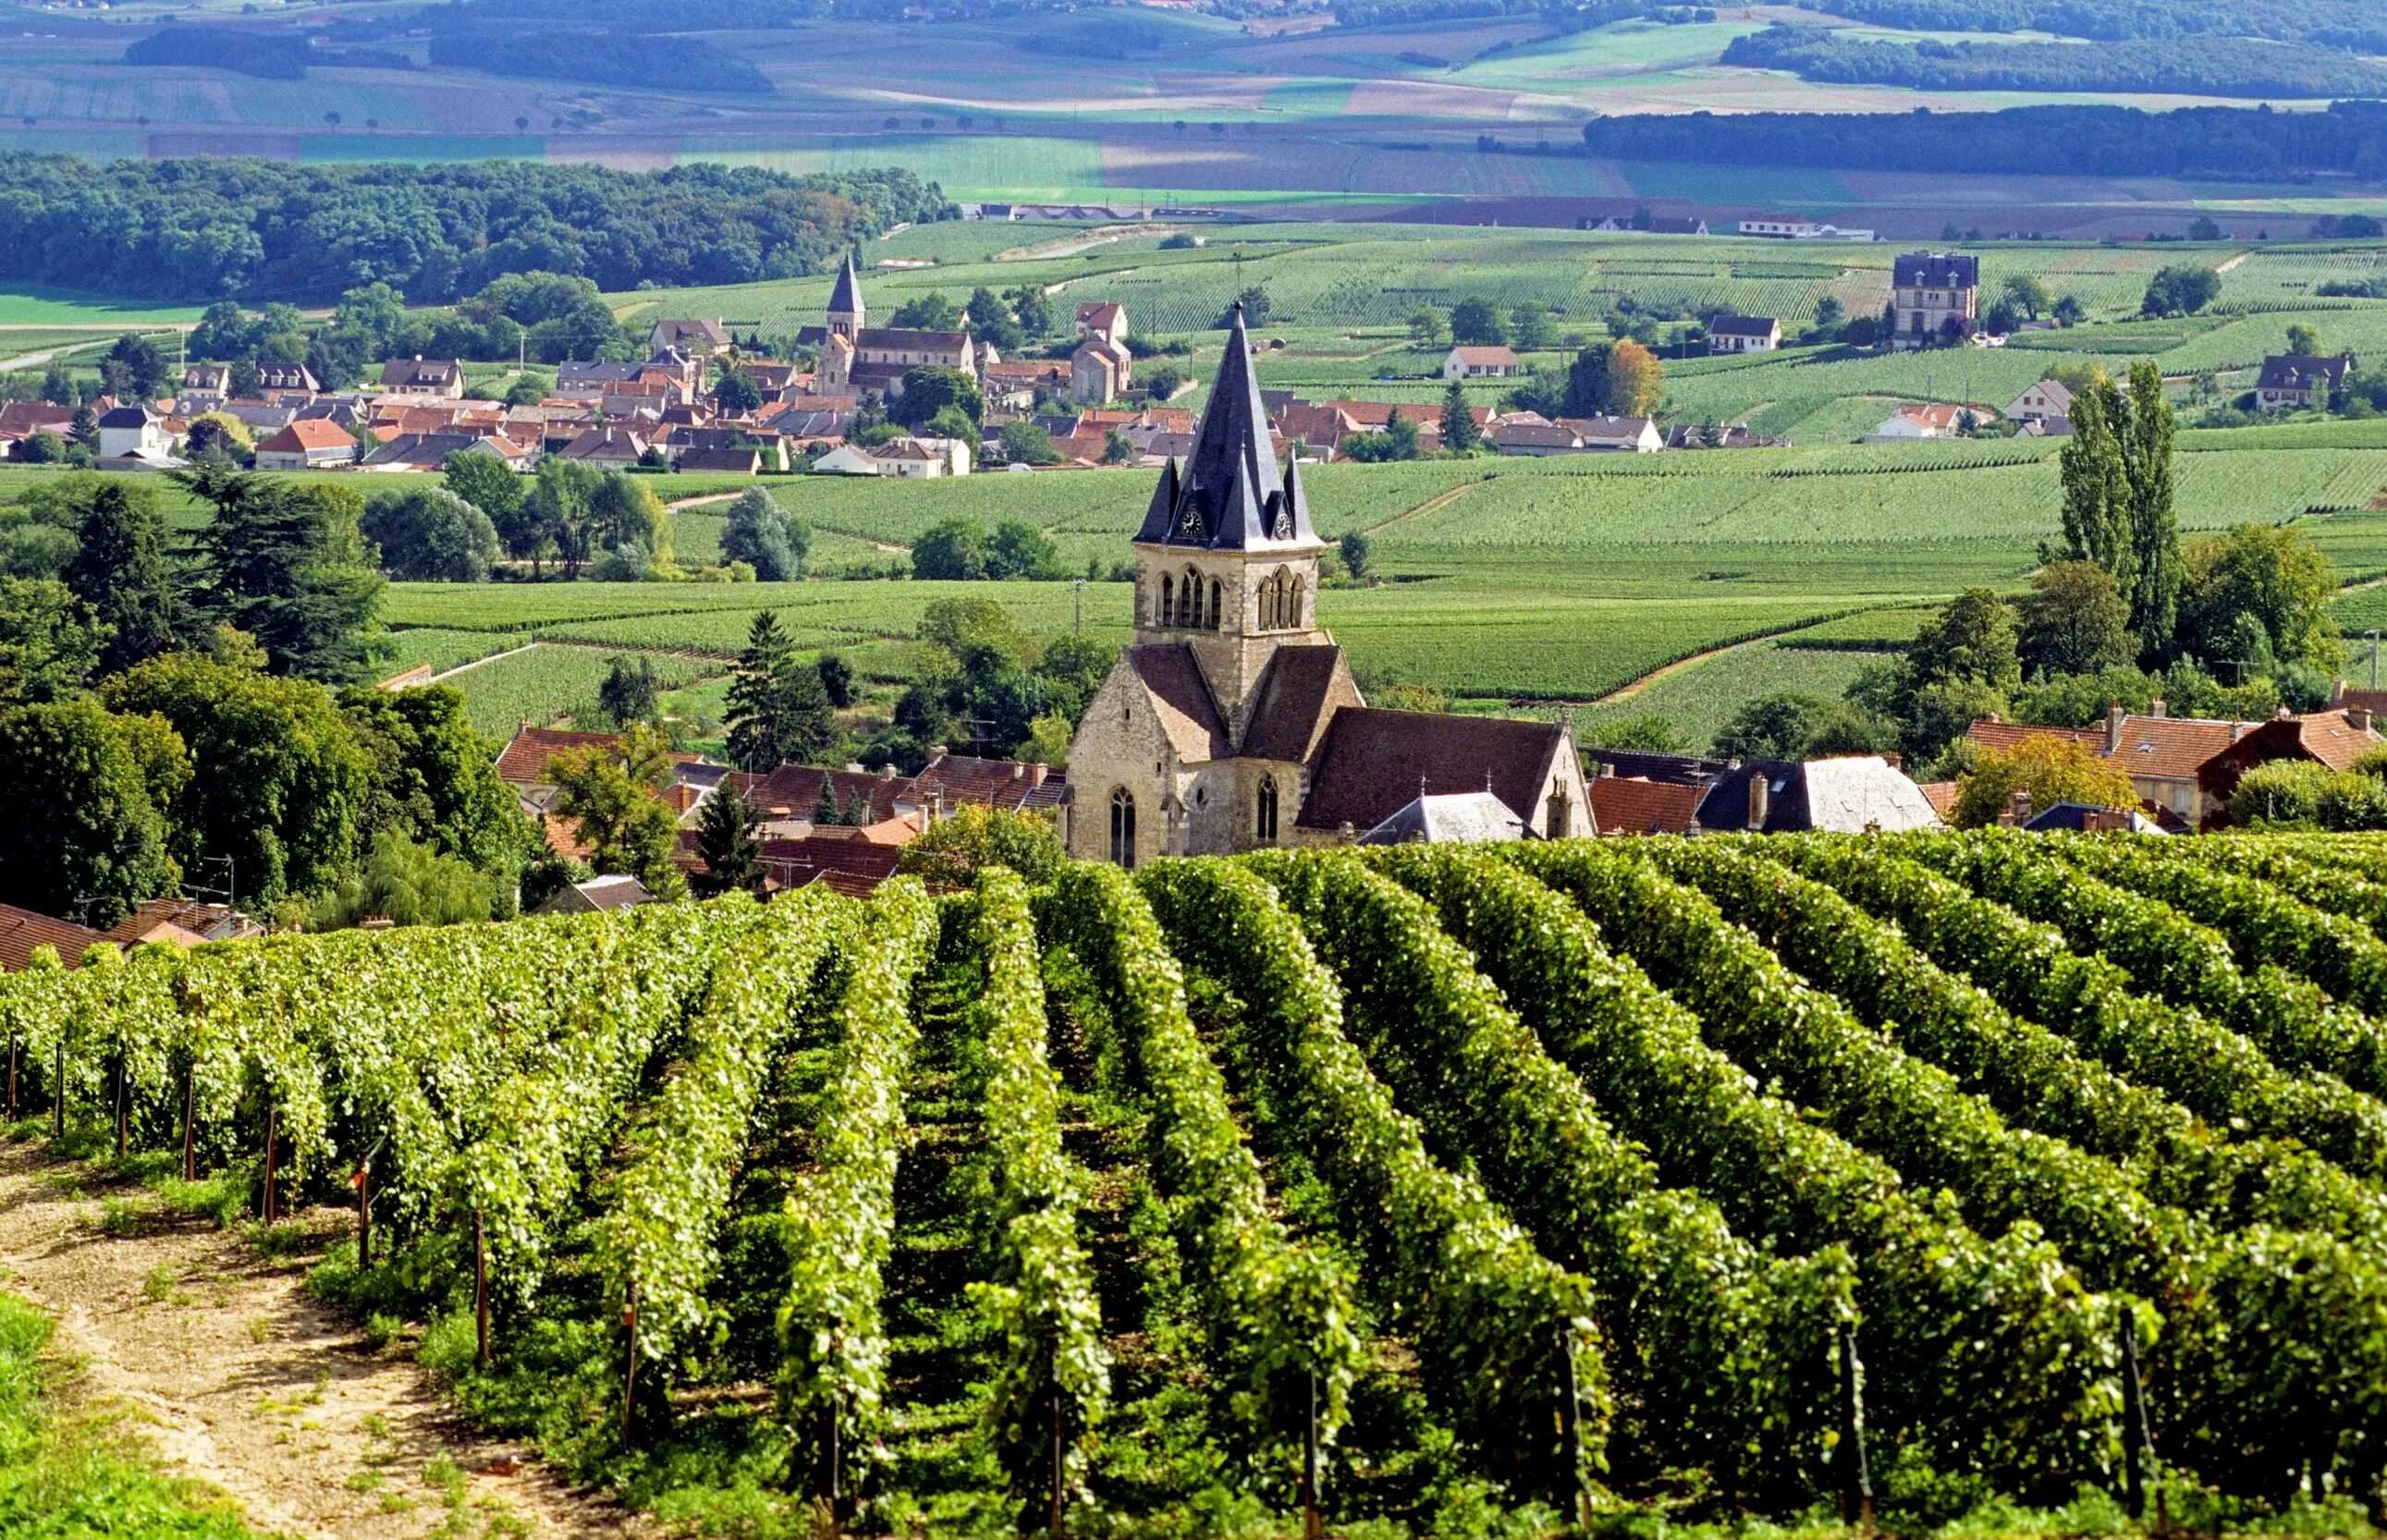 Нормандия шампань. Бургундия Франш Конте виноградники. Бургундия регион Франции. Бургундия-Франш-Конте Франция. Замки Бургундии Франш Конте.